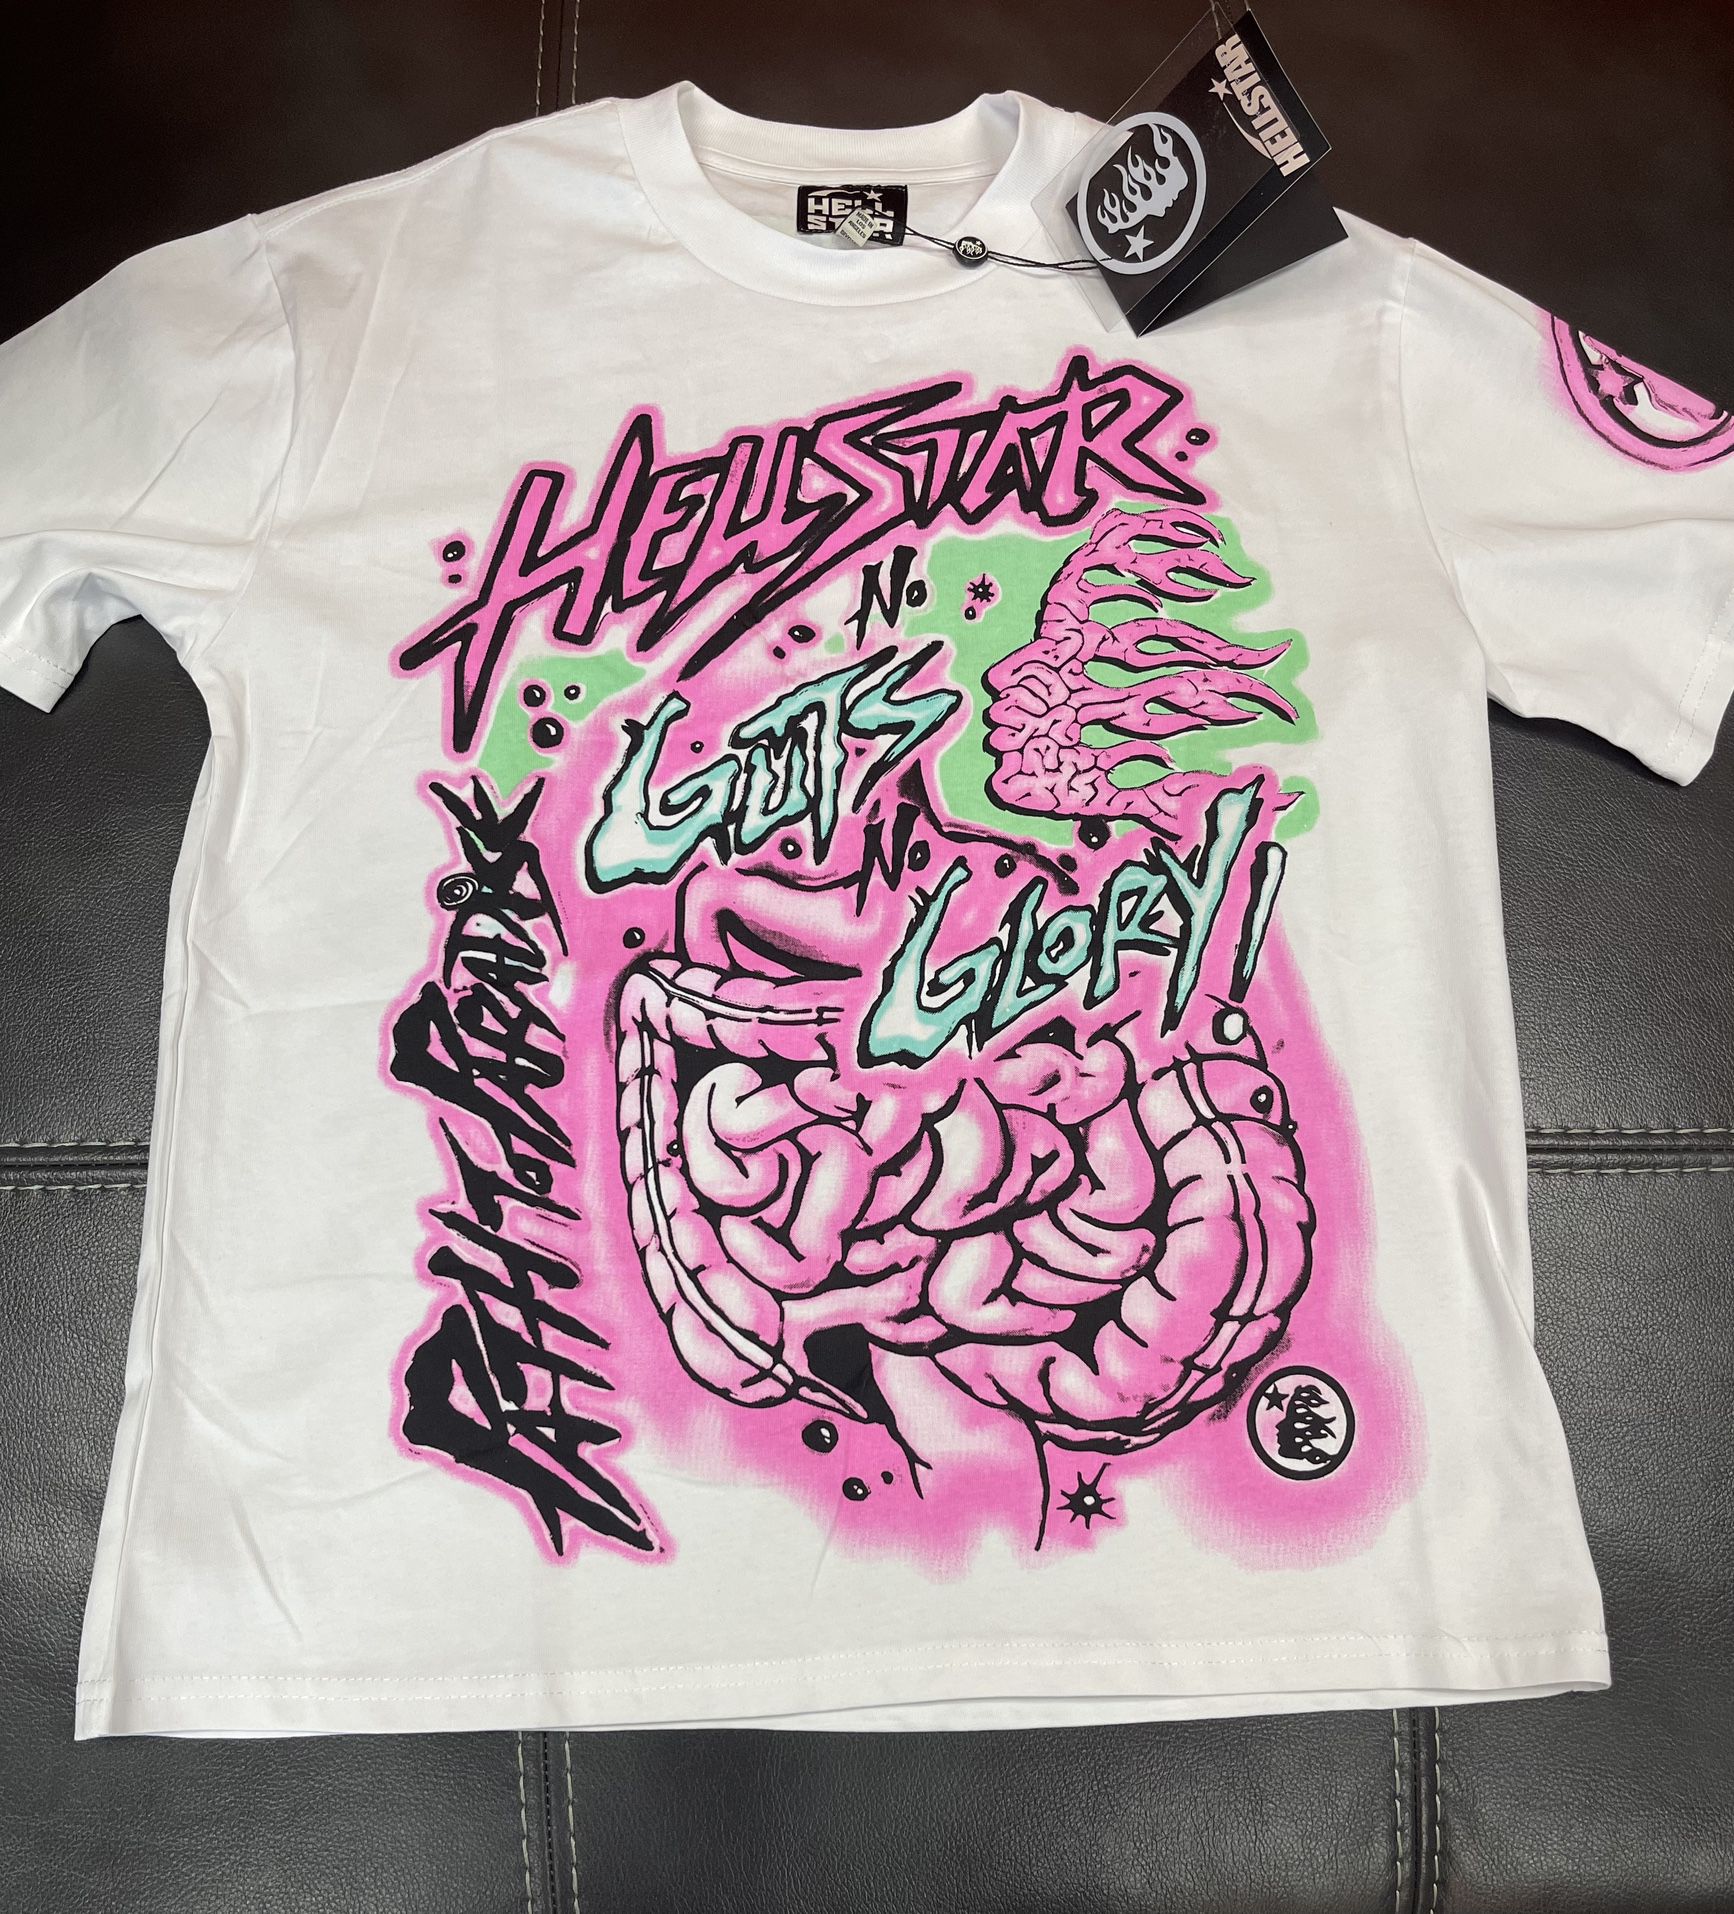 HellStar Shirt (sizes Small-3x)